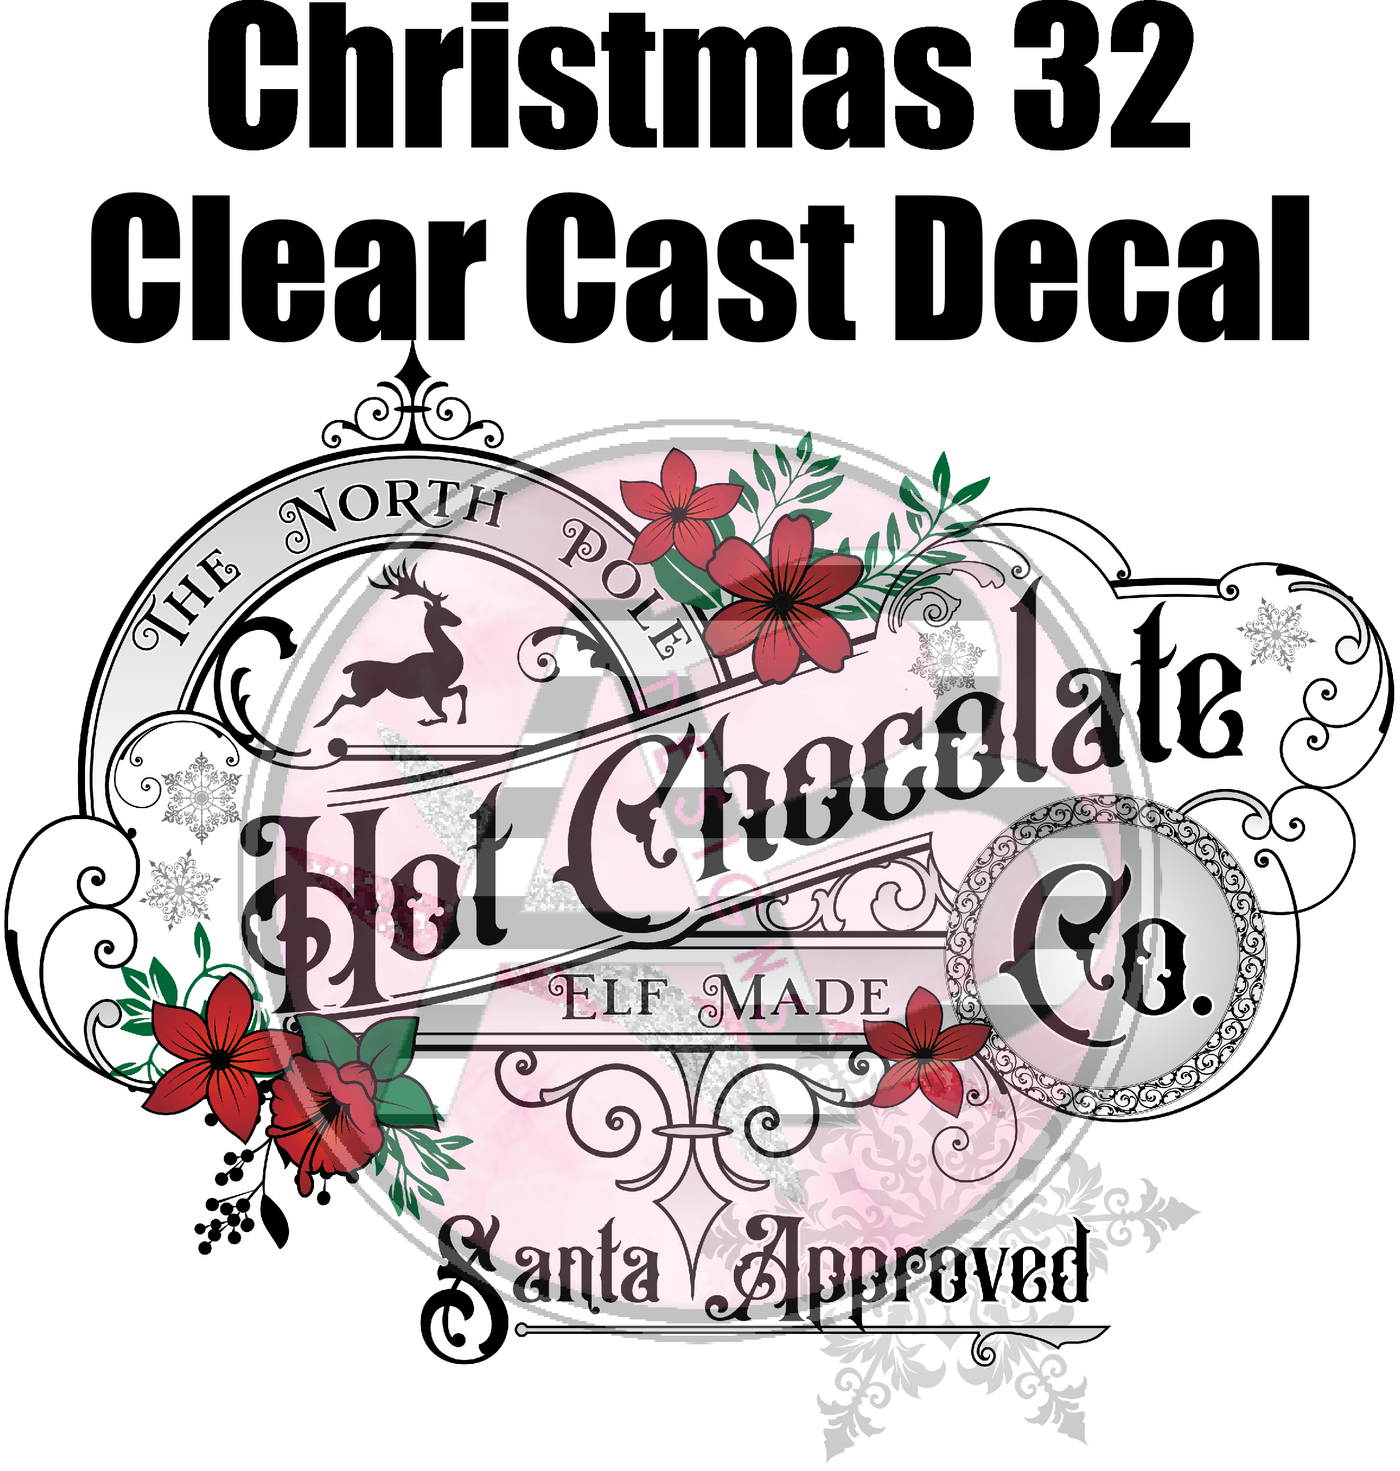 Christmas 32 - Clear Cast Decal